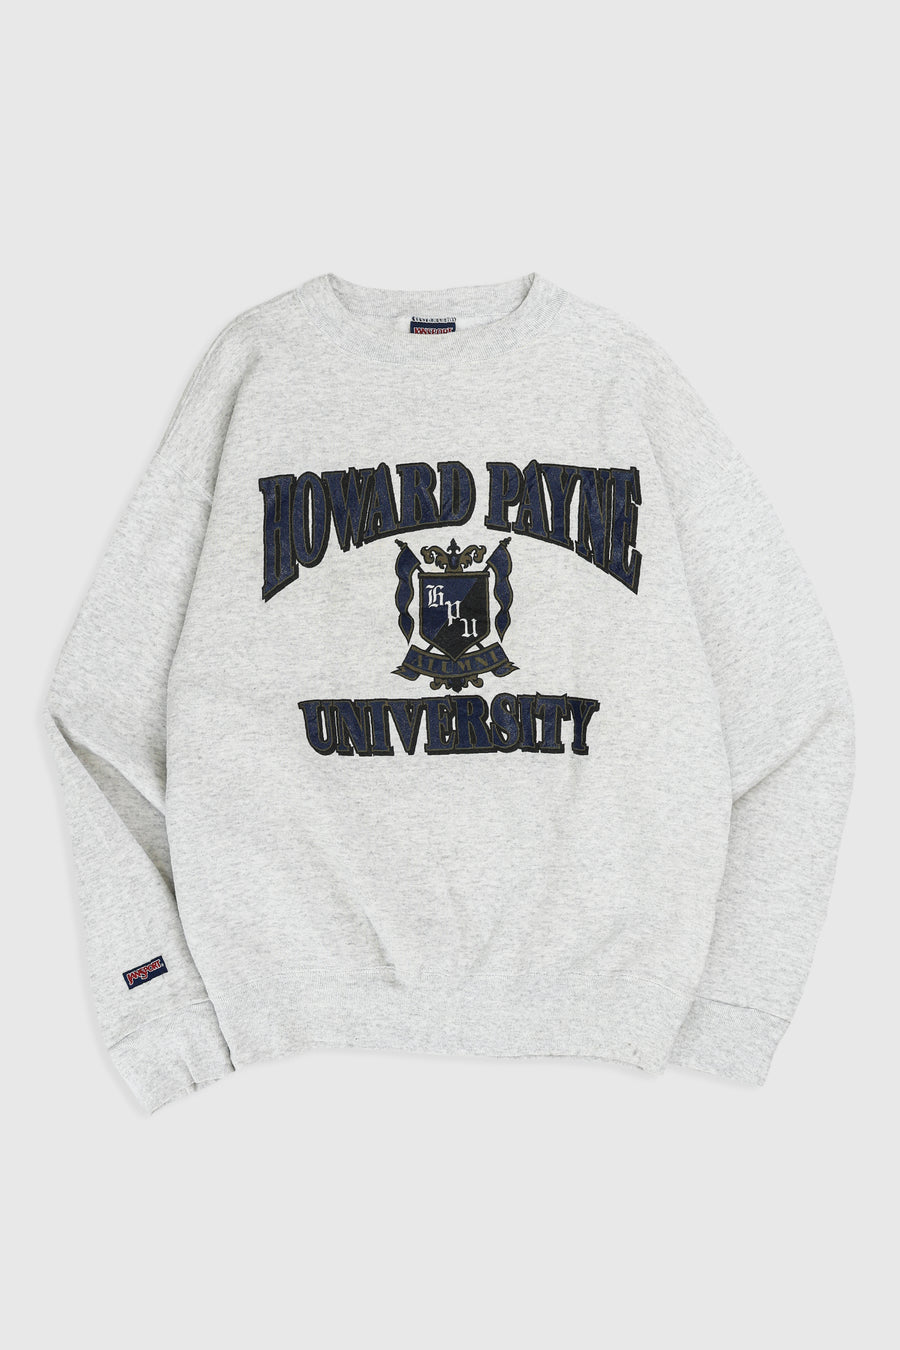 Vintage Howard Payne University Sweatshirt